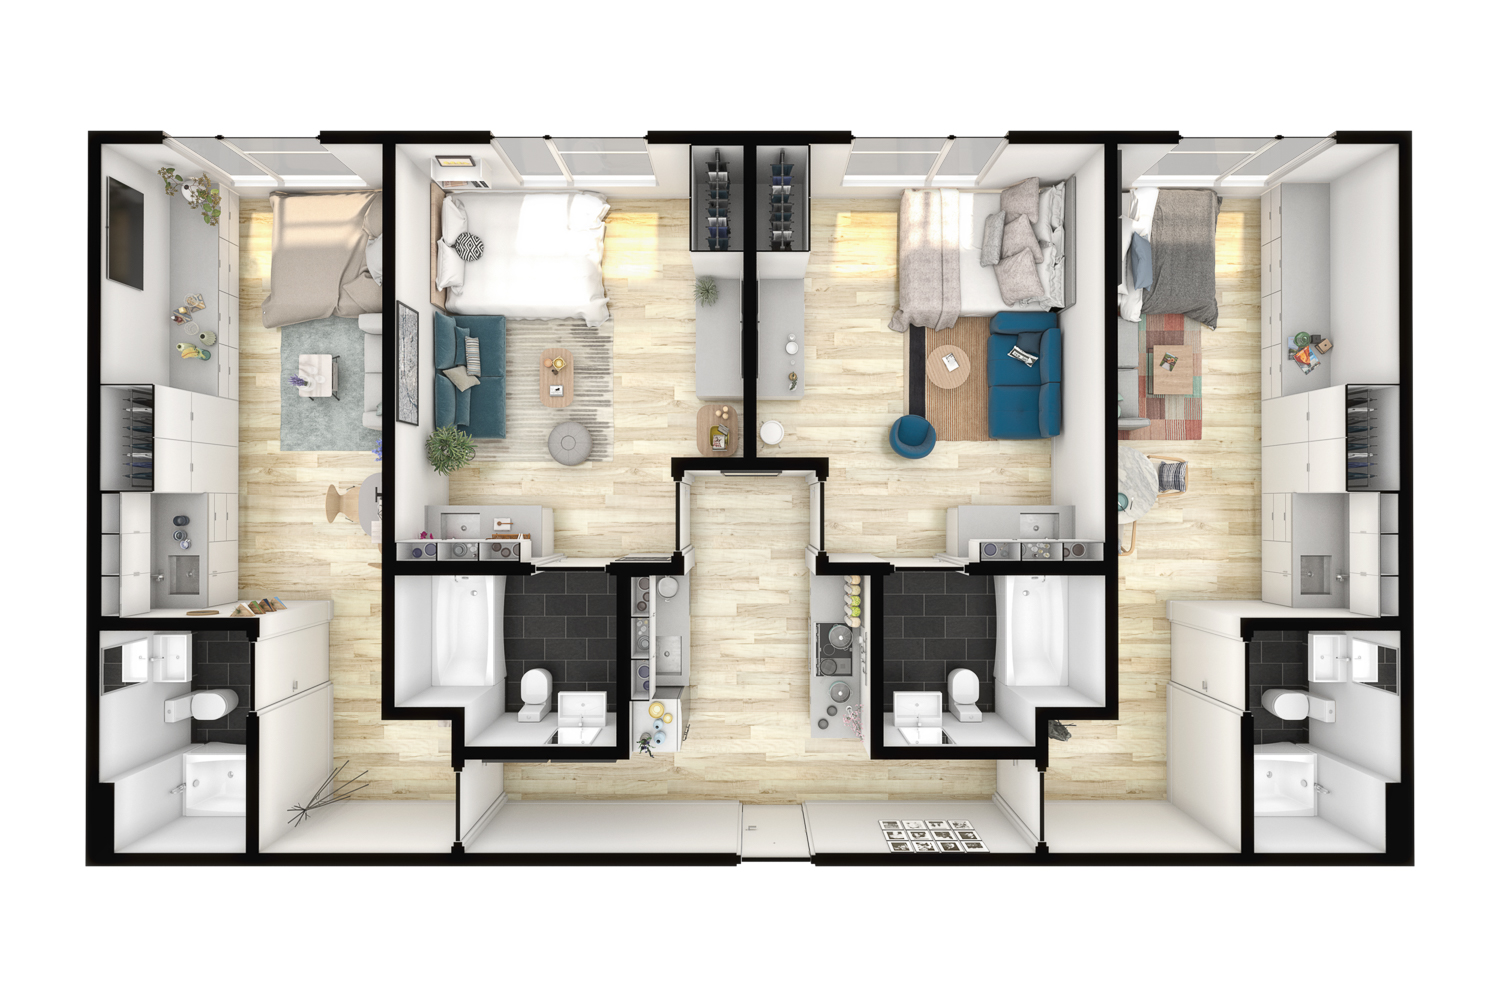 820 West MacArthur Boulevard four bedroom efficiency units floor plan, rendering by Levy Design Partners via Riaz Capital